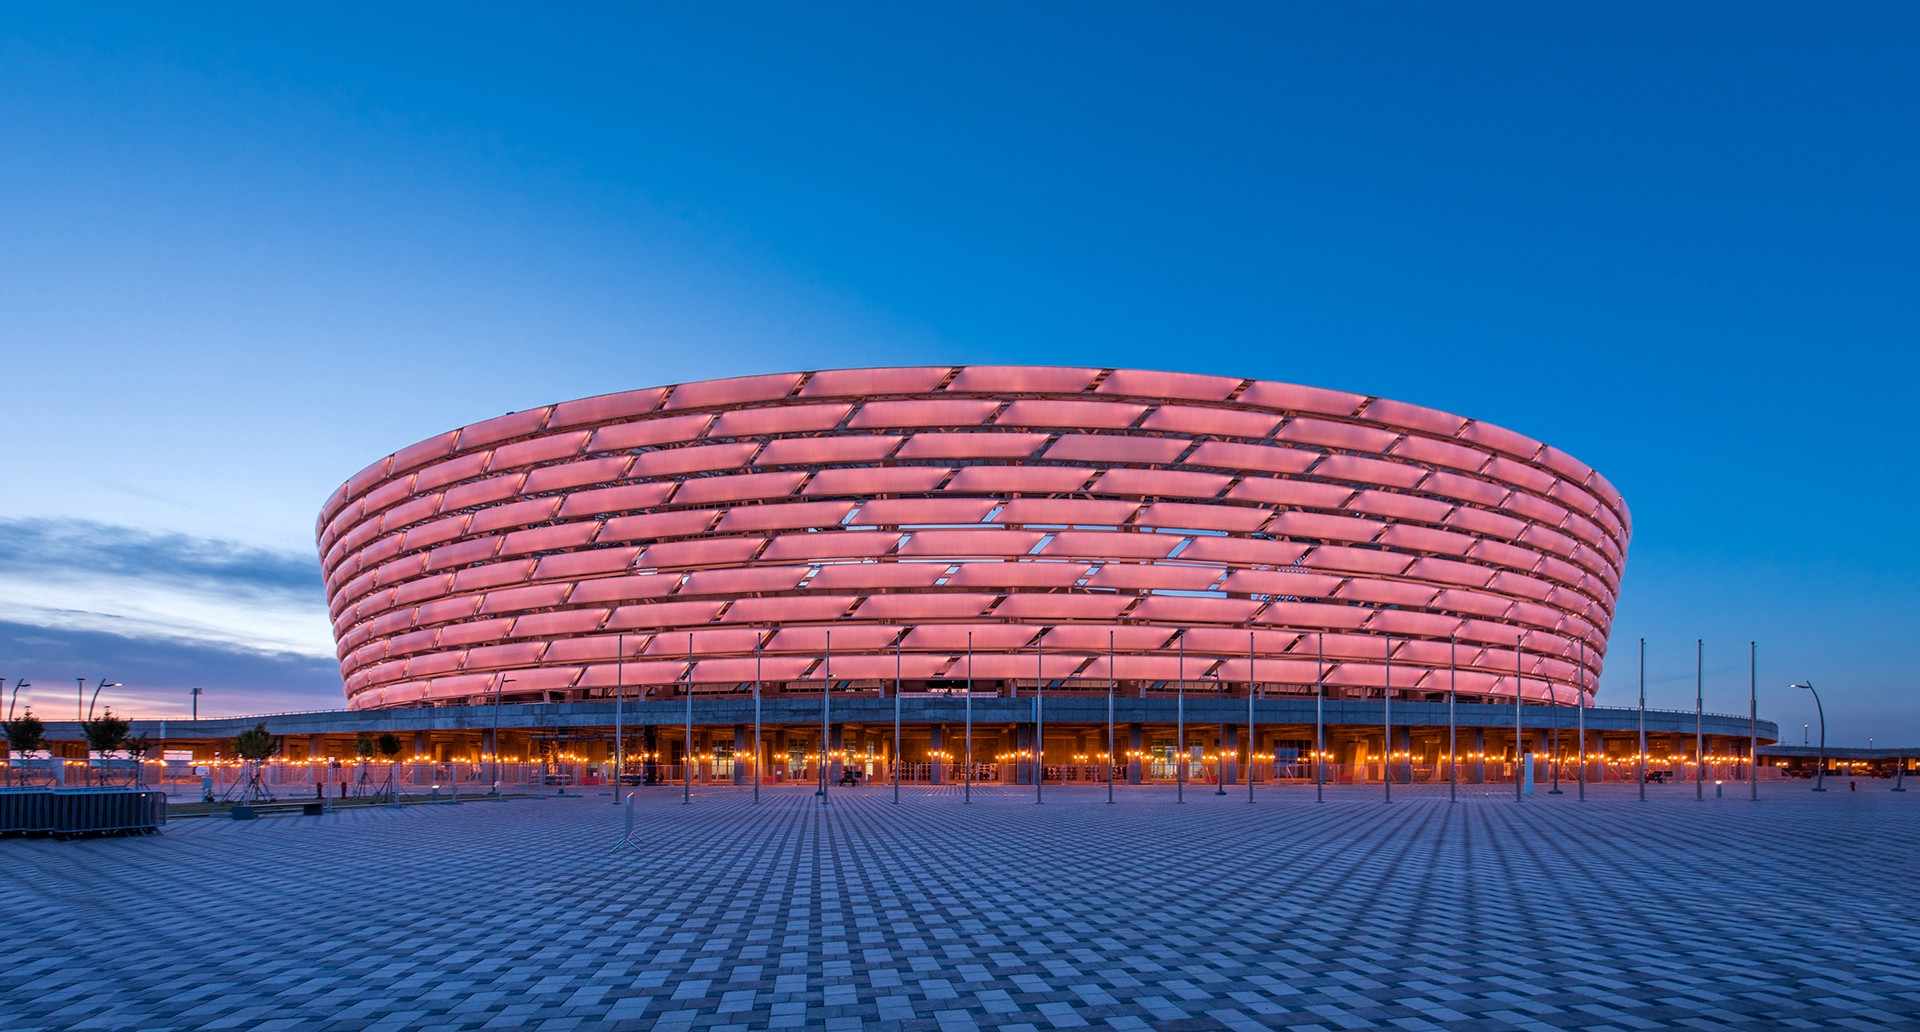 УЕФА наградила Бакинский олимпийский стадион